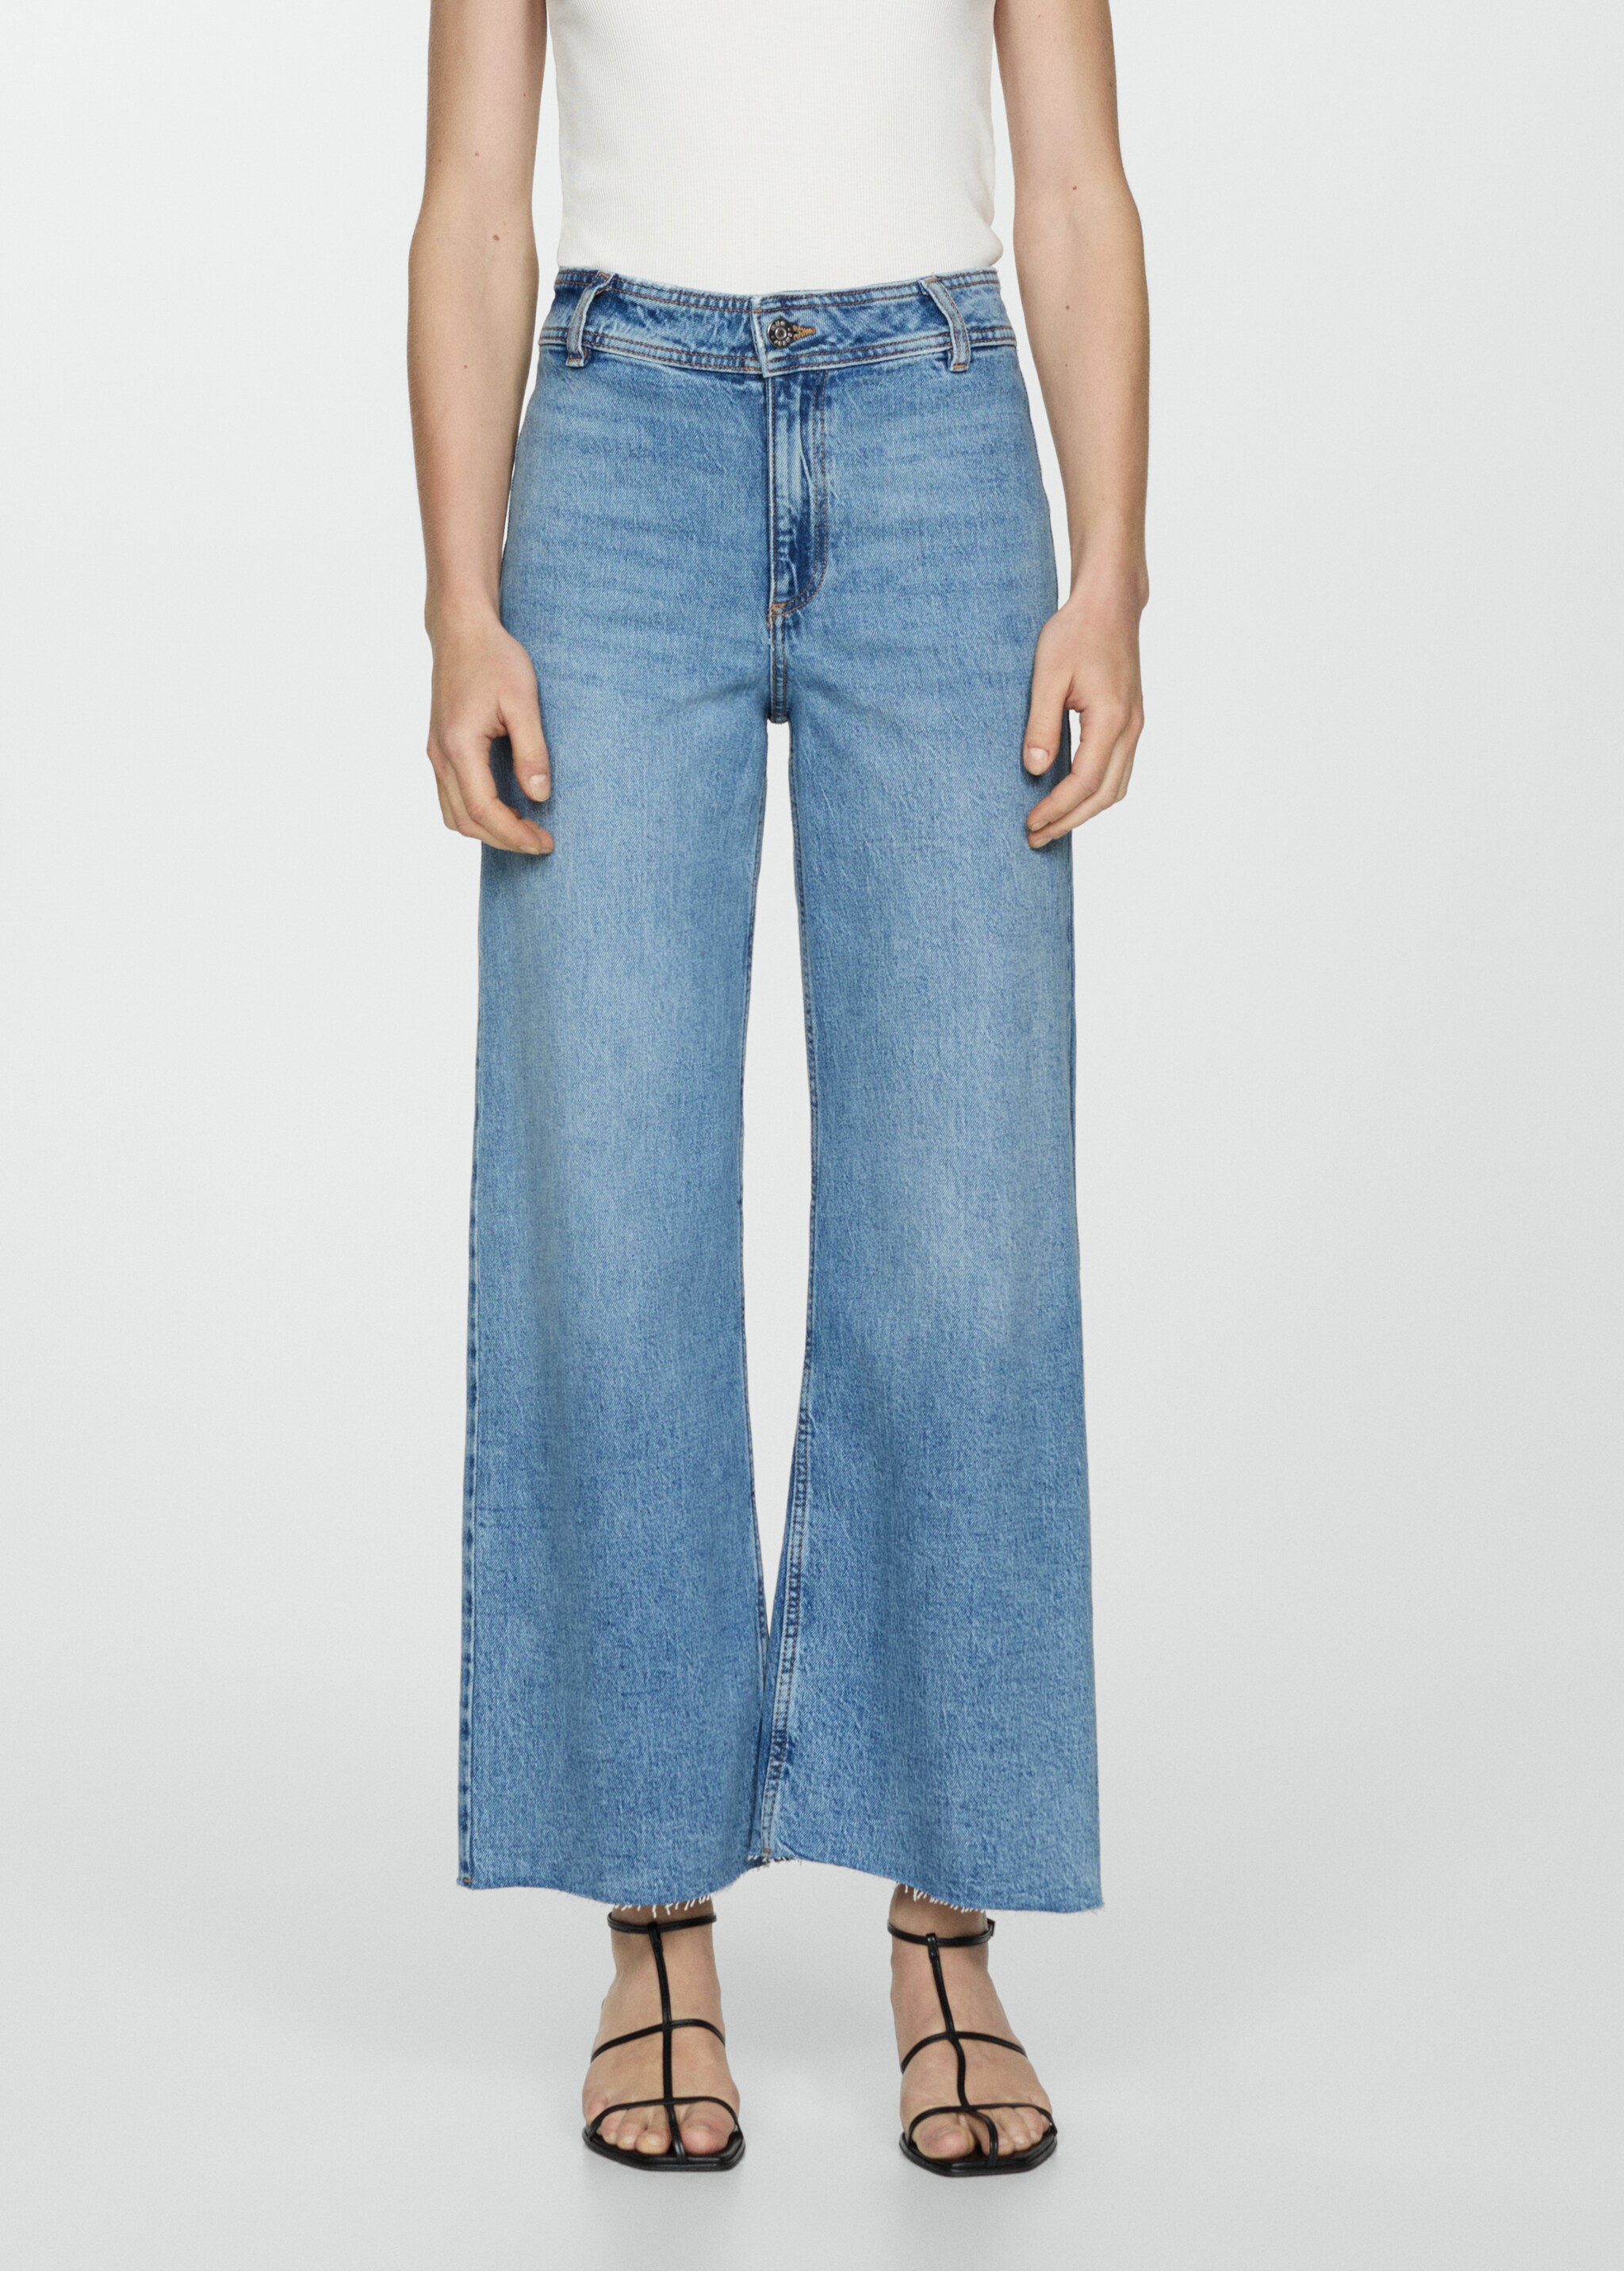 Catherin culotte high rise jeans - Medium plane